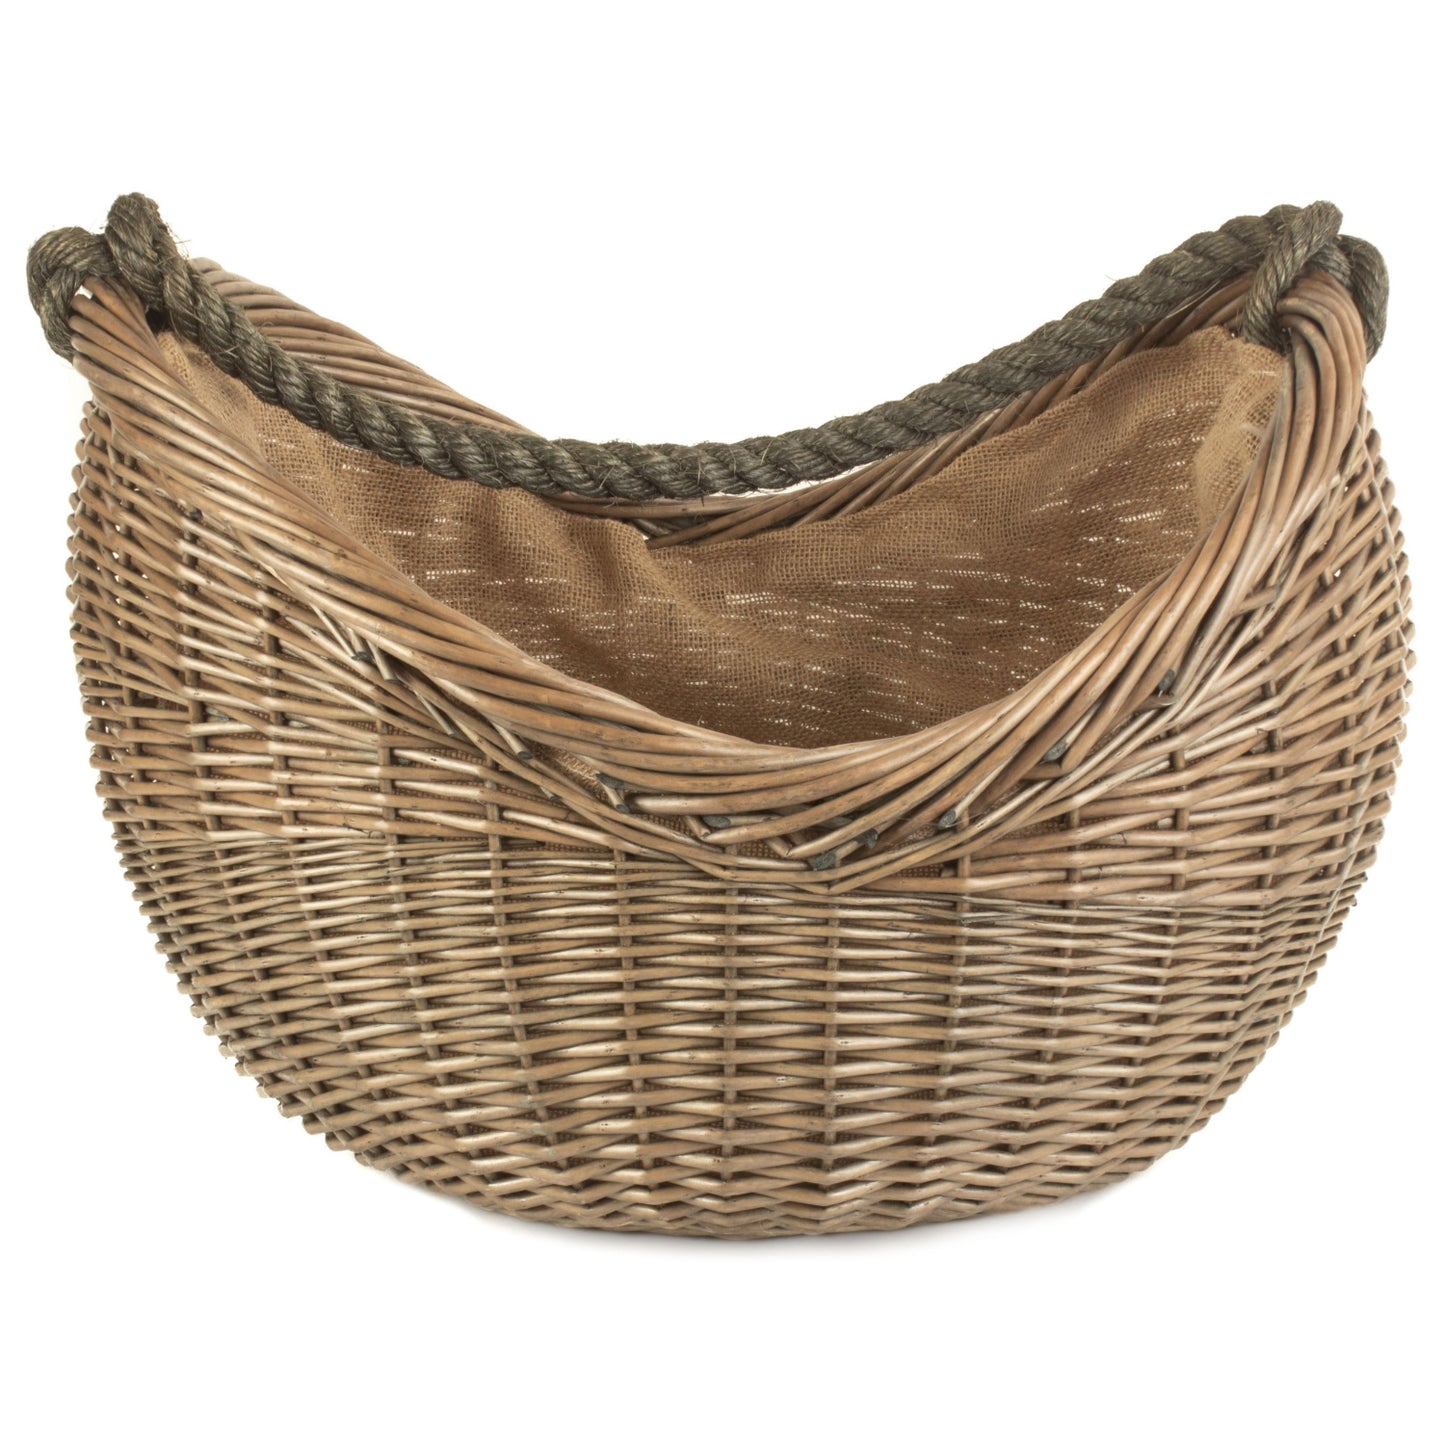 Antique Wash Rope Handled Carrying Basket